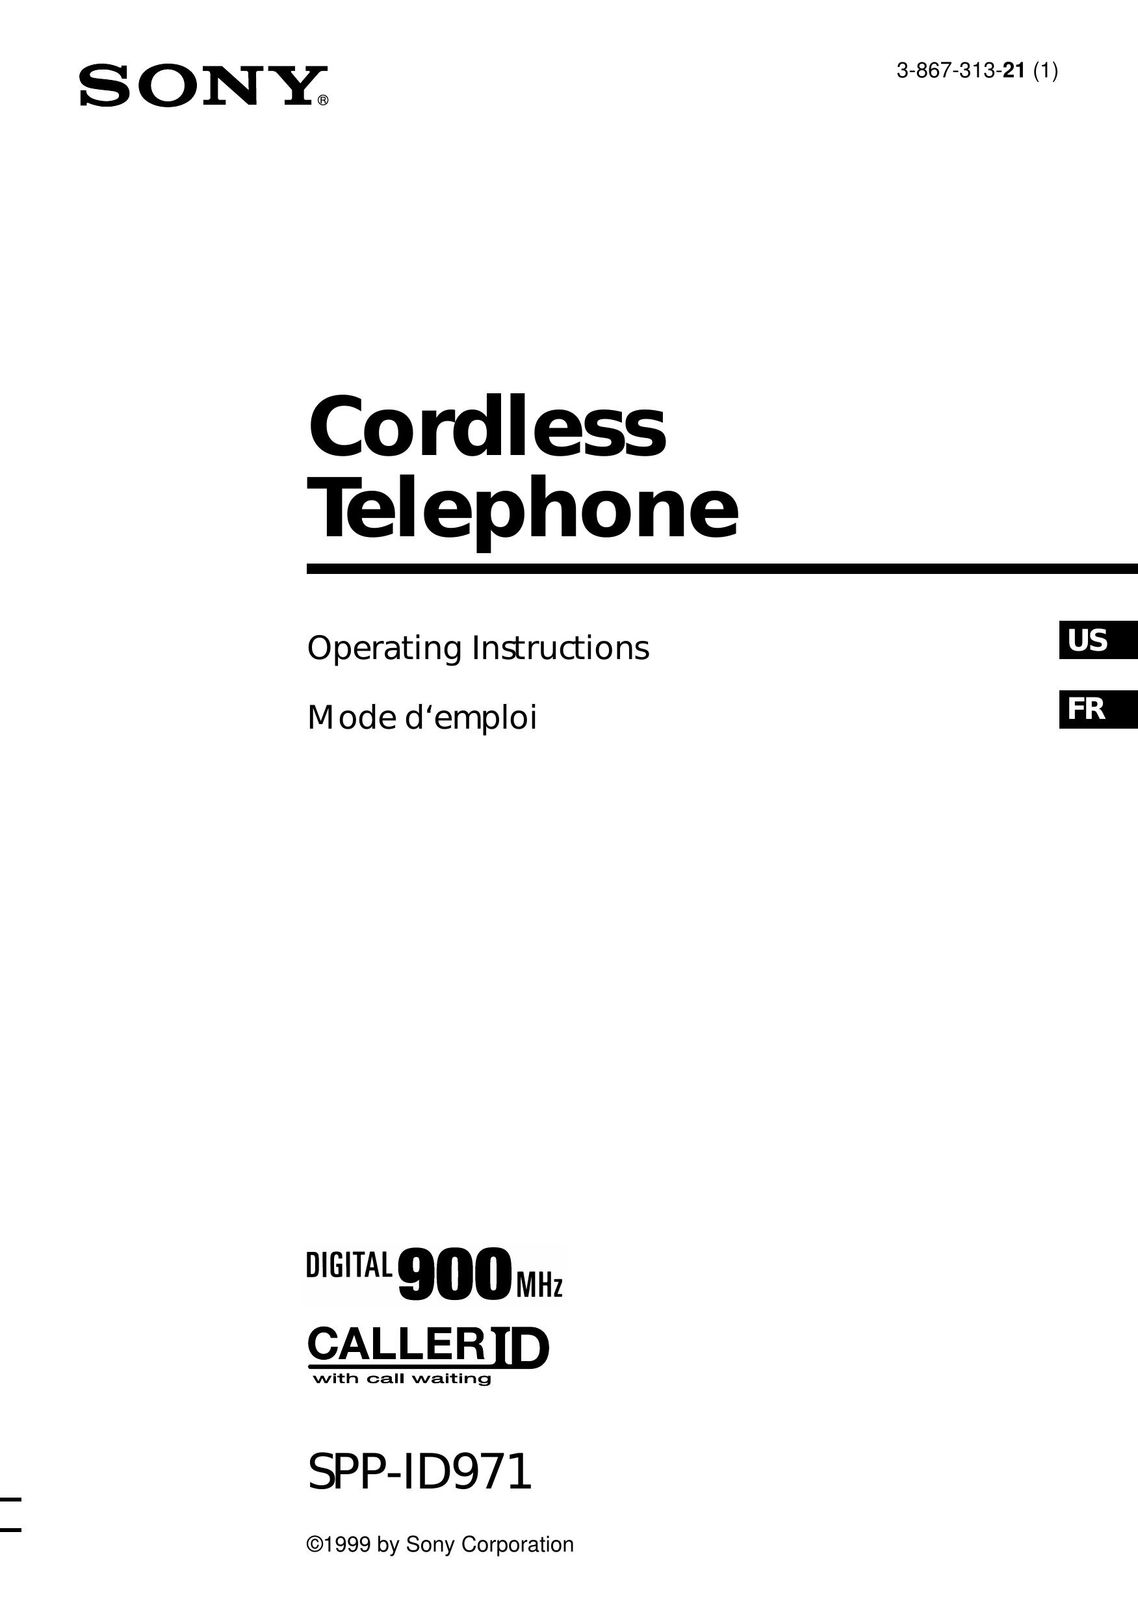 Sony SPP-ID971 Cordless Telephone User Manual